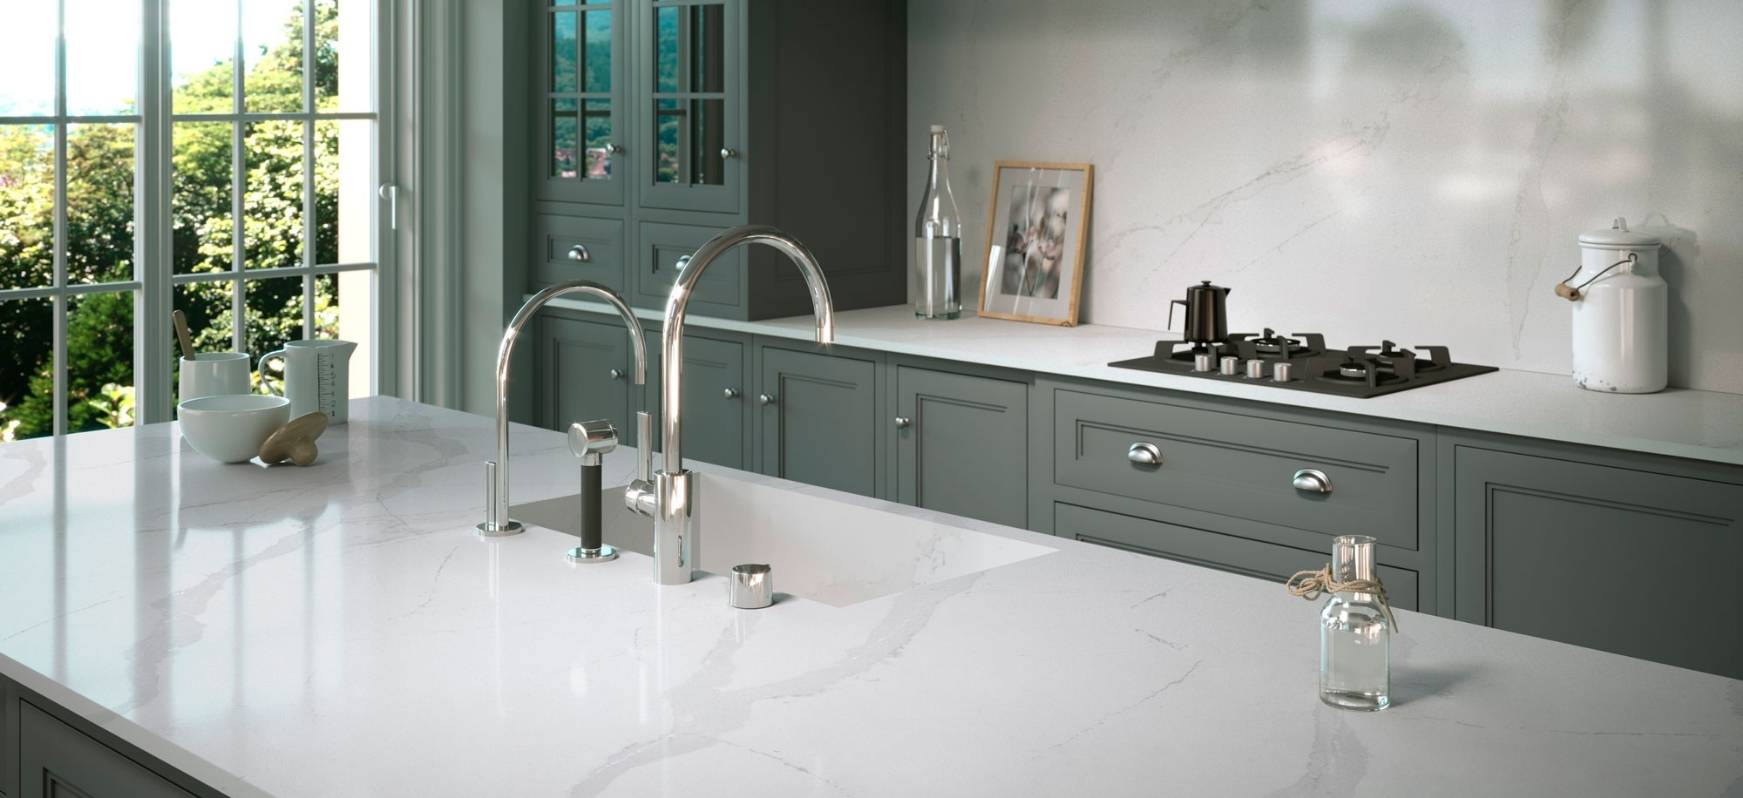 pros and cons of quartz countertops white quartz countertops white kitchen countertops with quartz backsplash